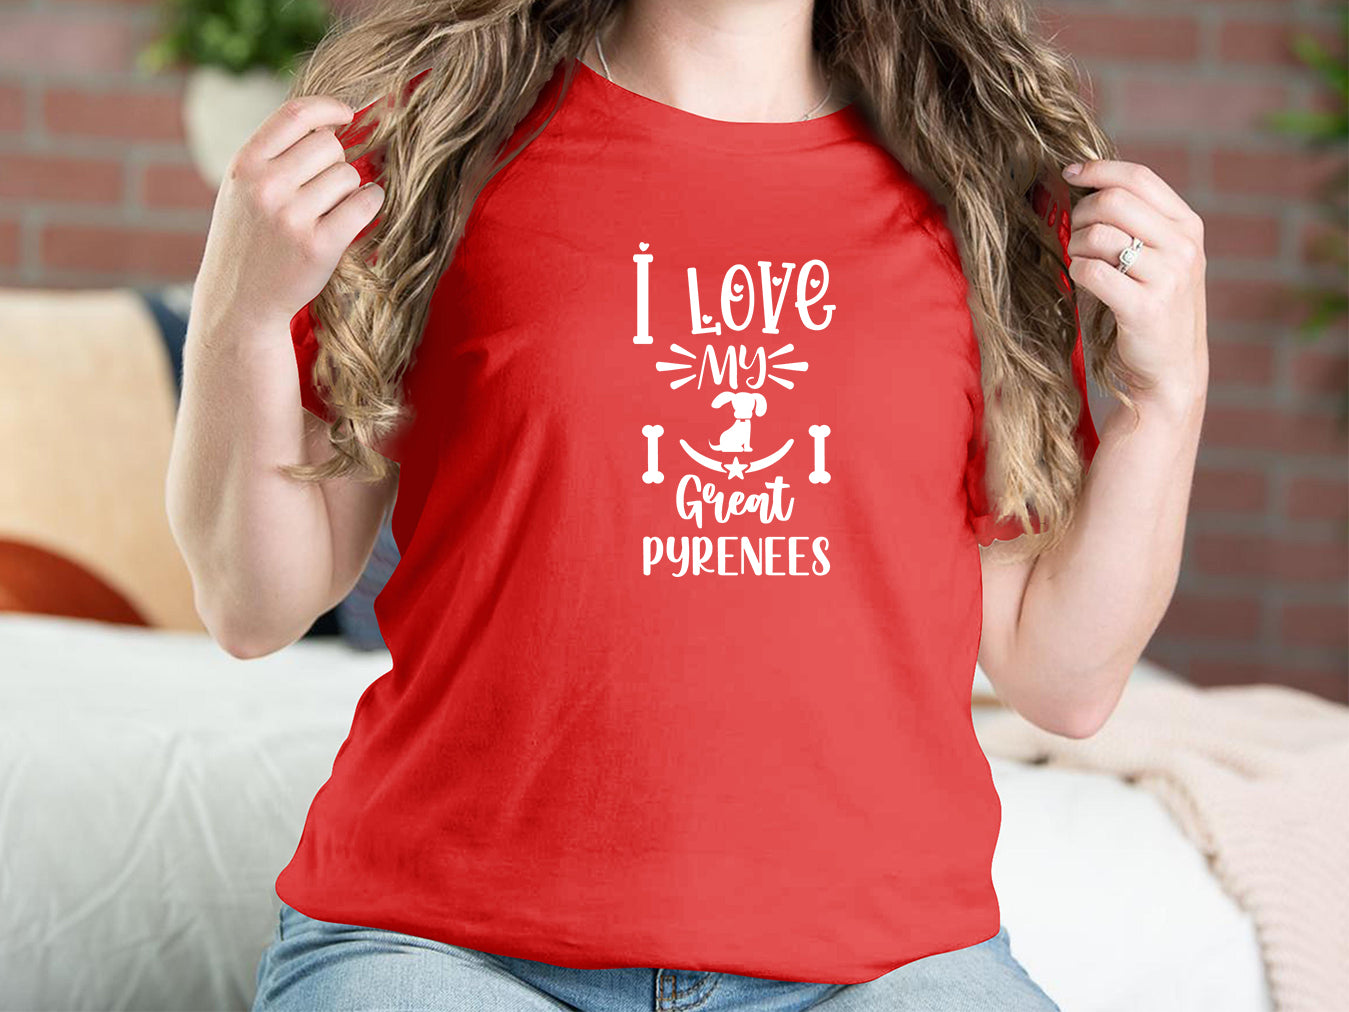 I Love My Great Pyrenees Dog T-shirts